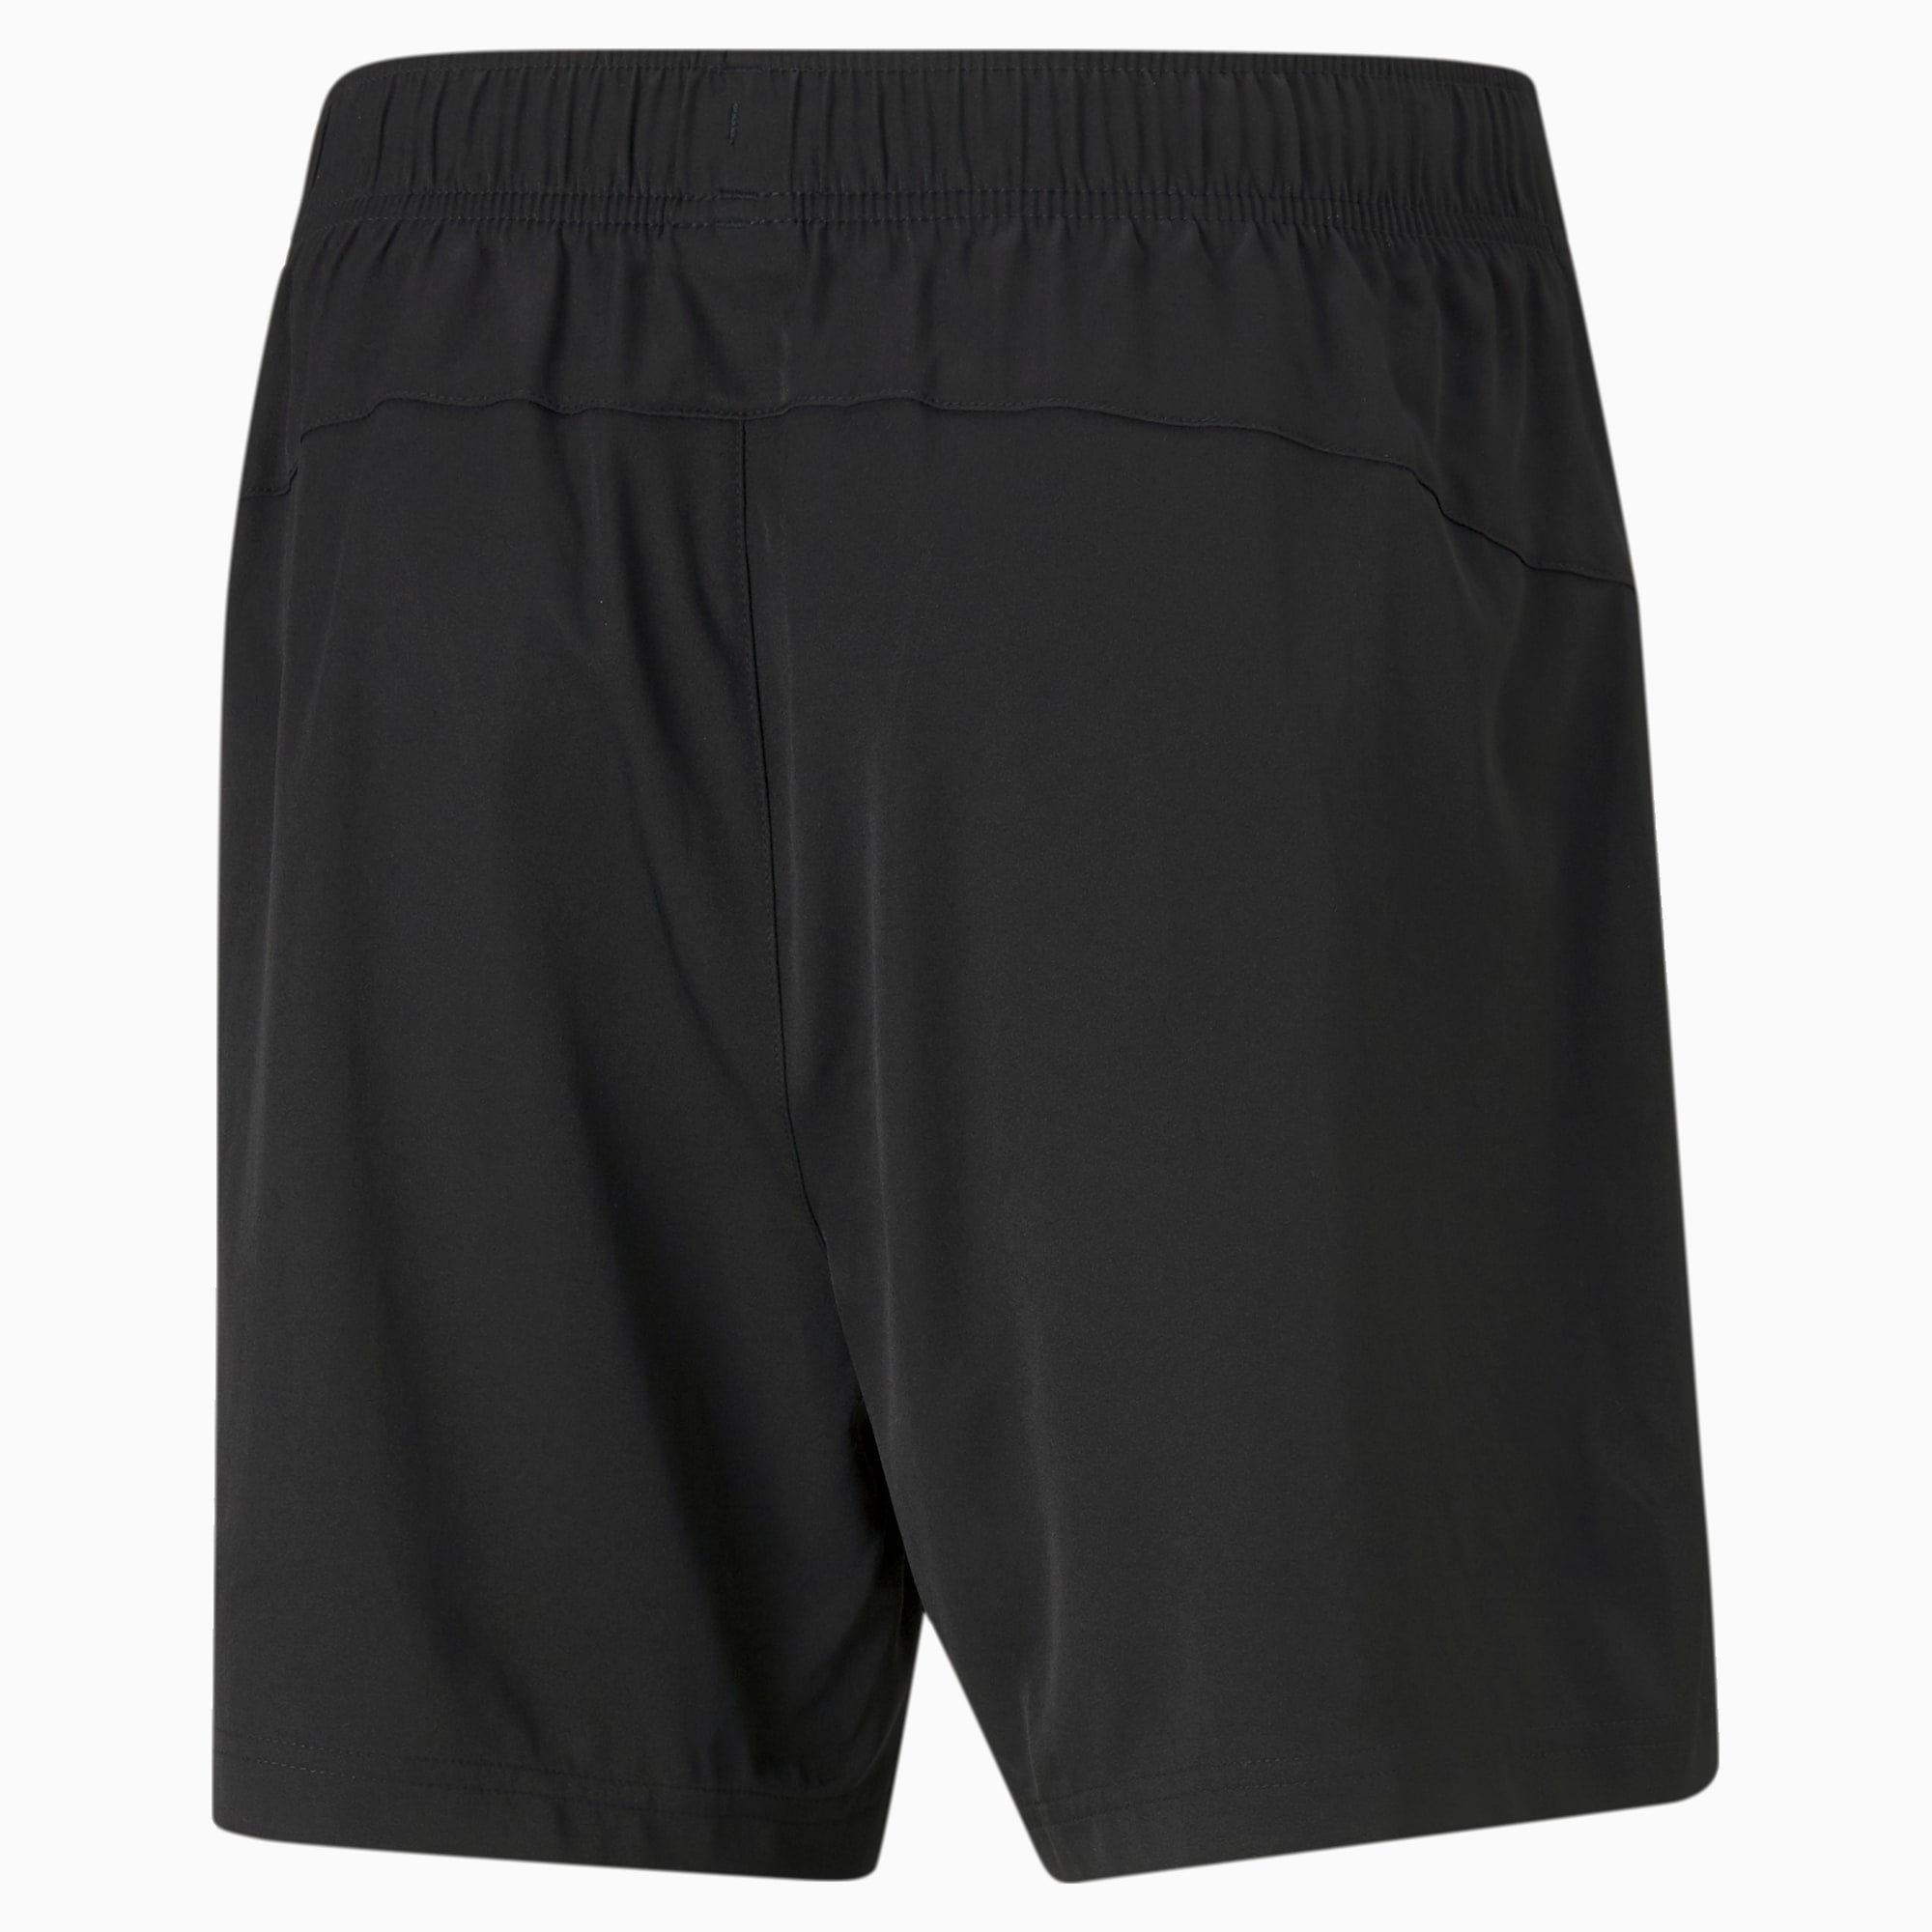 PUMA Active Woven 5 Men's Shorts, Black, Size XS, Clothing